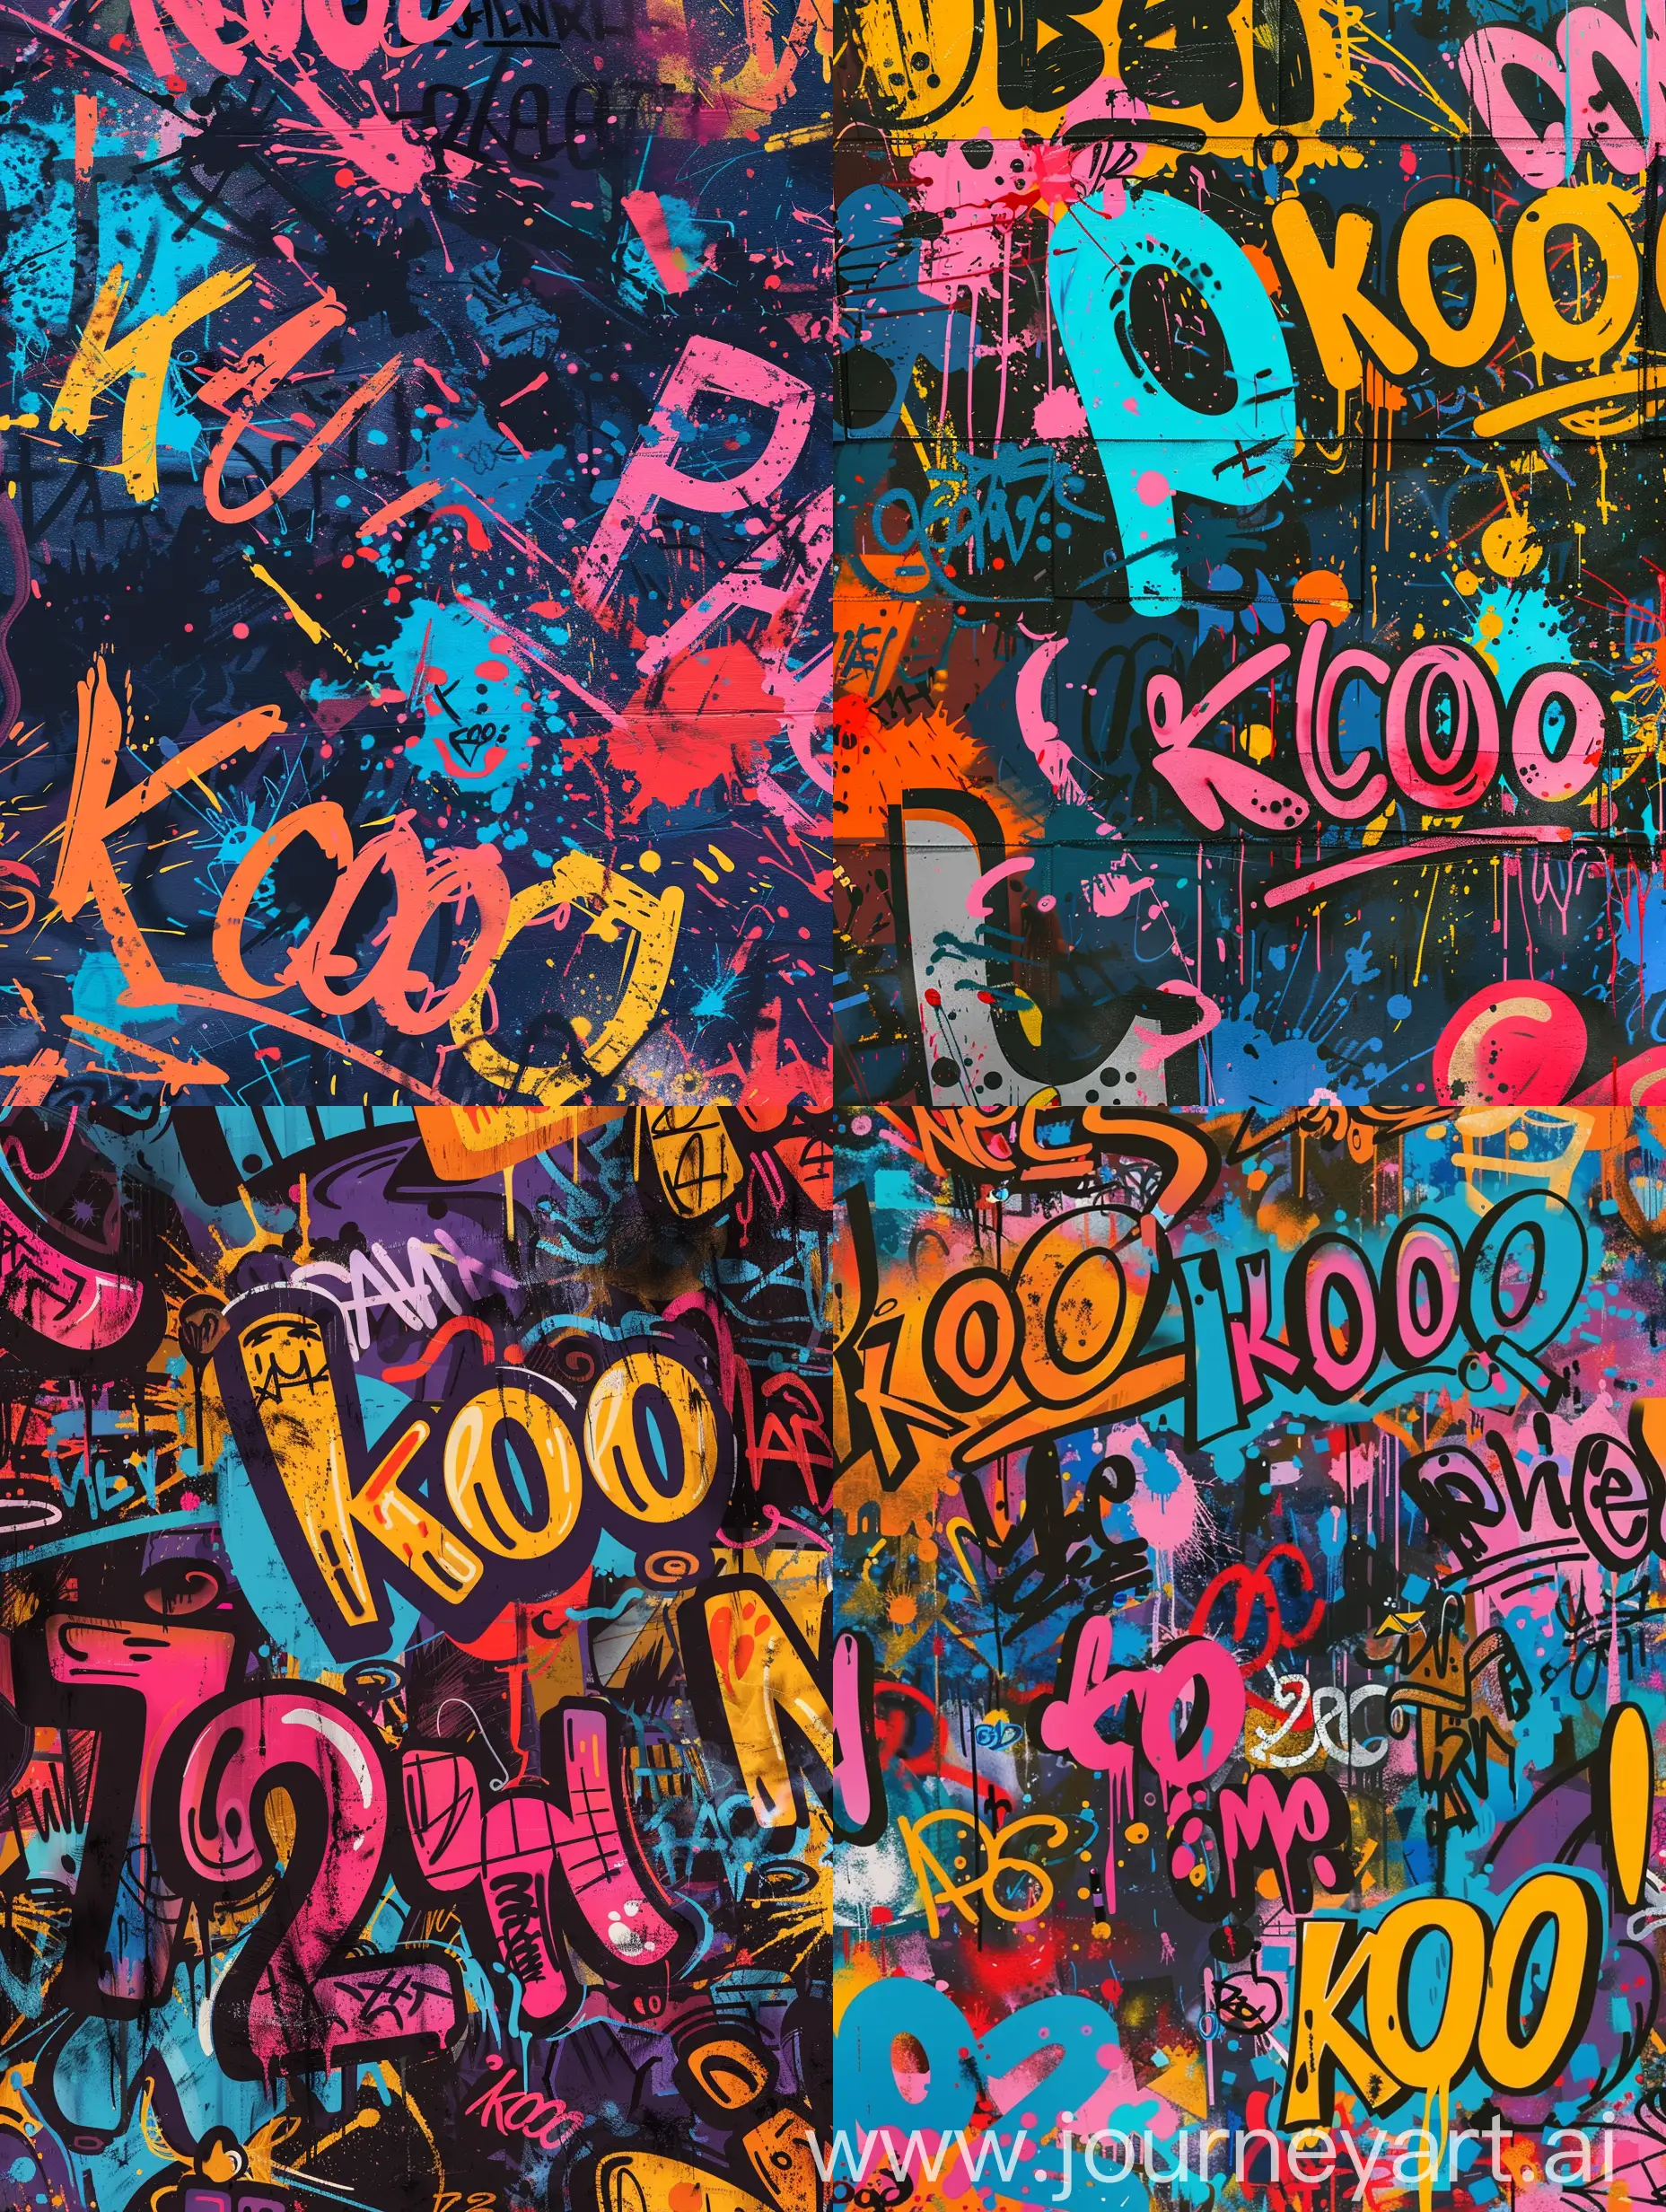 flat illustration graffiti on cava:2, illustration of Andy warhol, box,  graffiti, traditional vibrant, Andy warhol:2, pop art, urban, detailed, tag, background full of dark paint splash and graffiti text, random sized graffiti text all over typography:2, urban, canva texture, text saying "kooo"